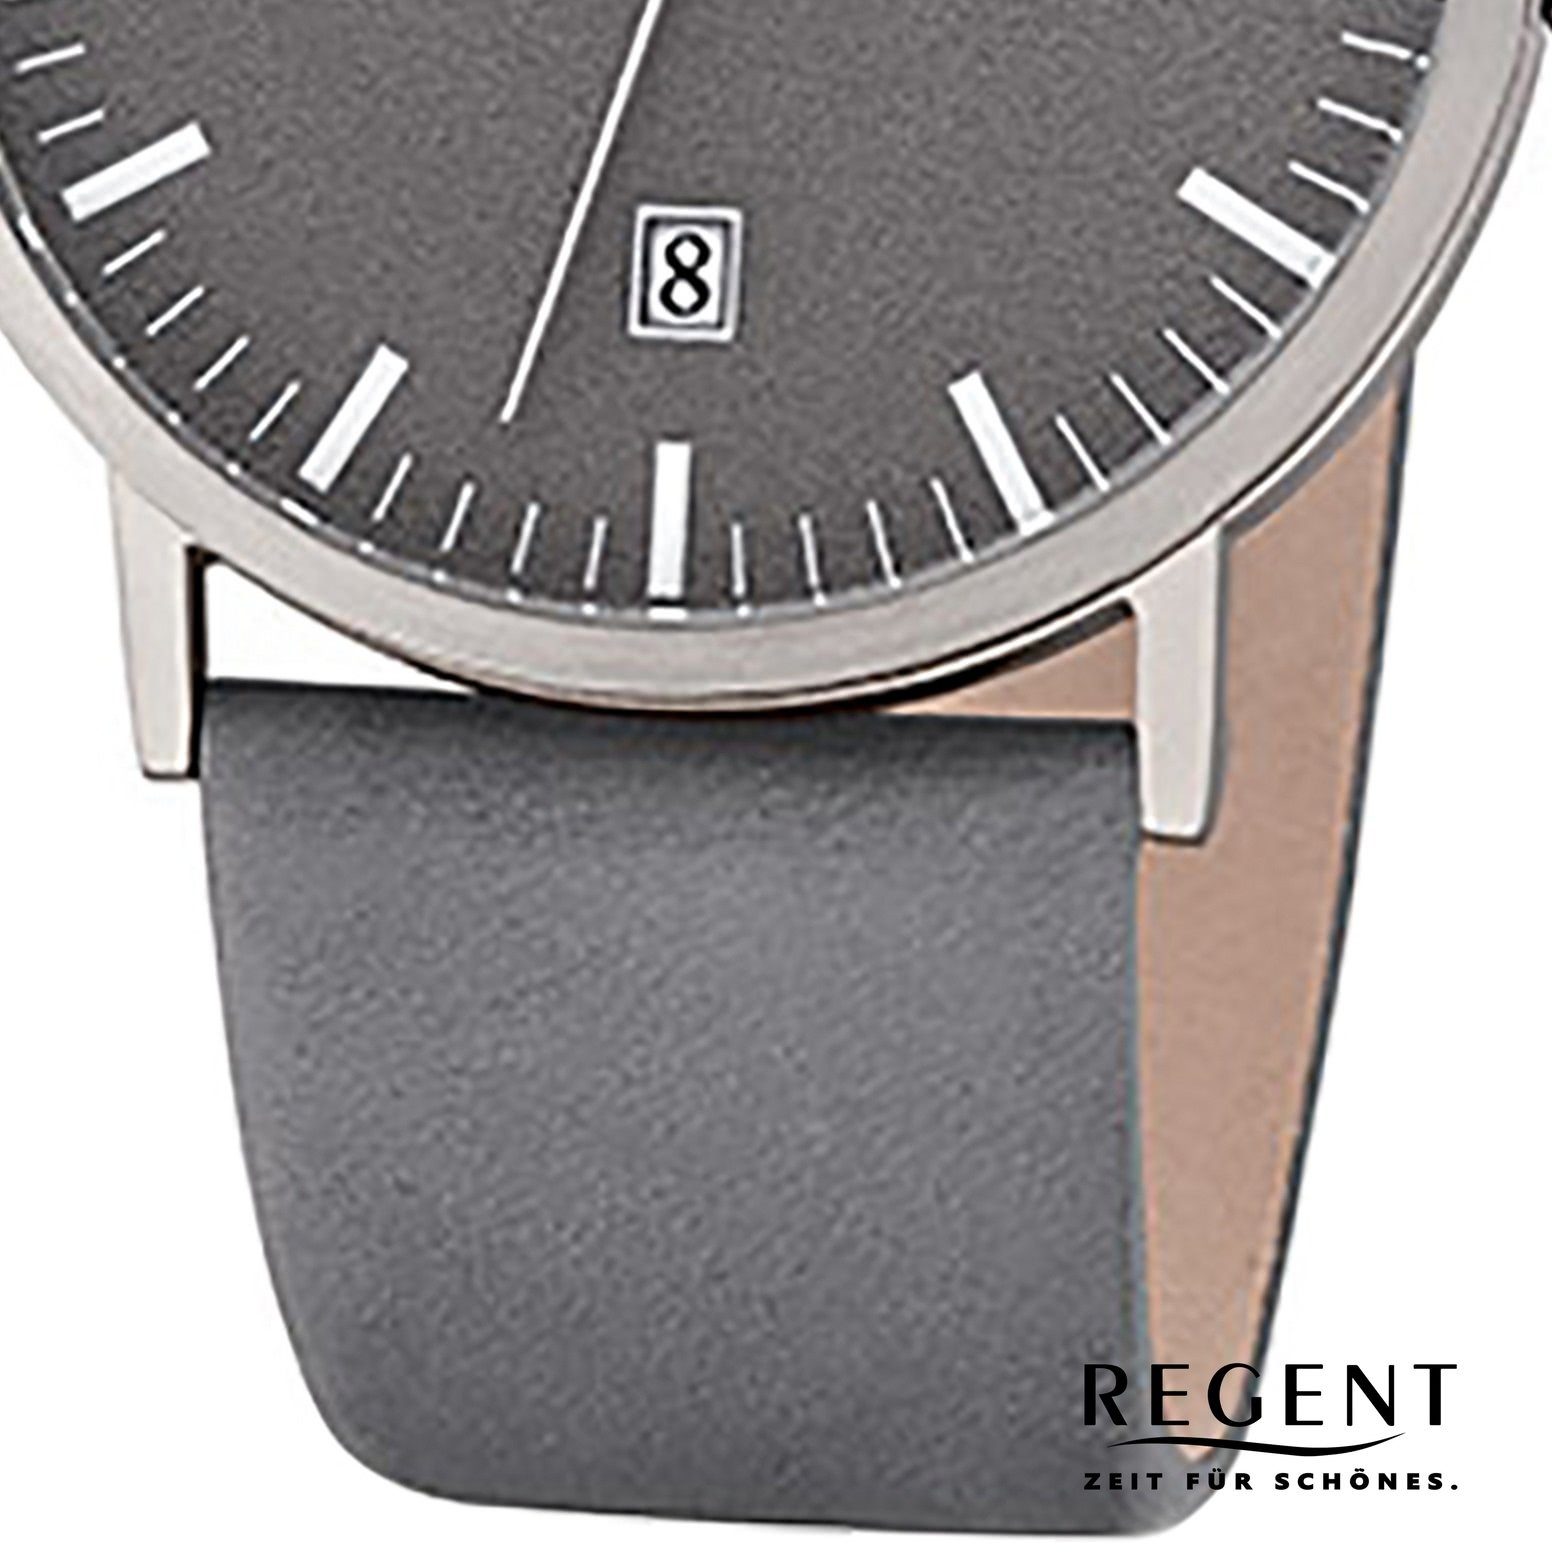 mittel Herren F-1234 (ca. Herren grau Quarzwerk, Armbanduhr Regent Uhr Regent 39mm), Lederarmband Leder rund, Quarzuhr